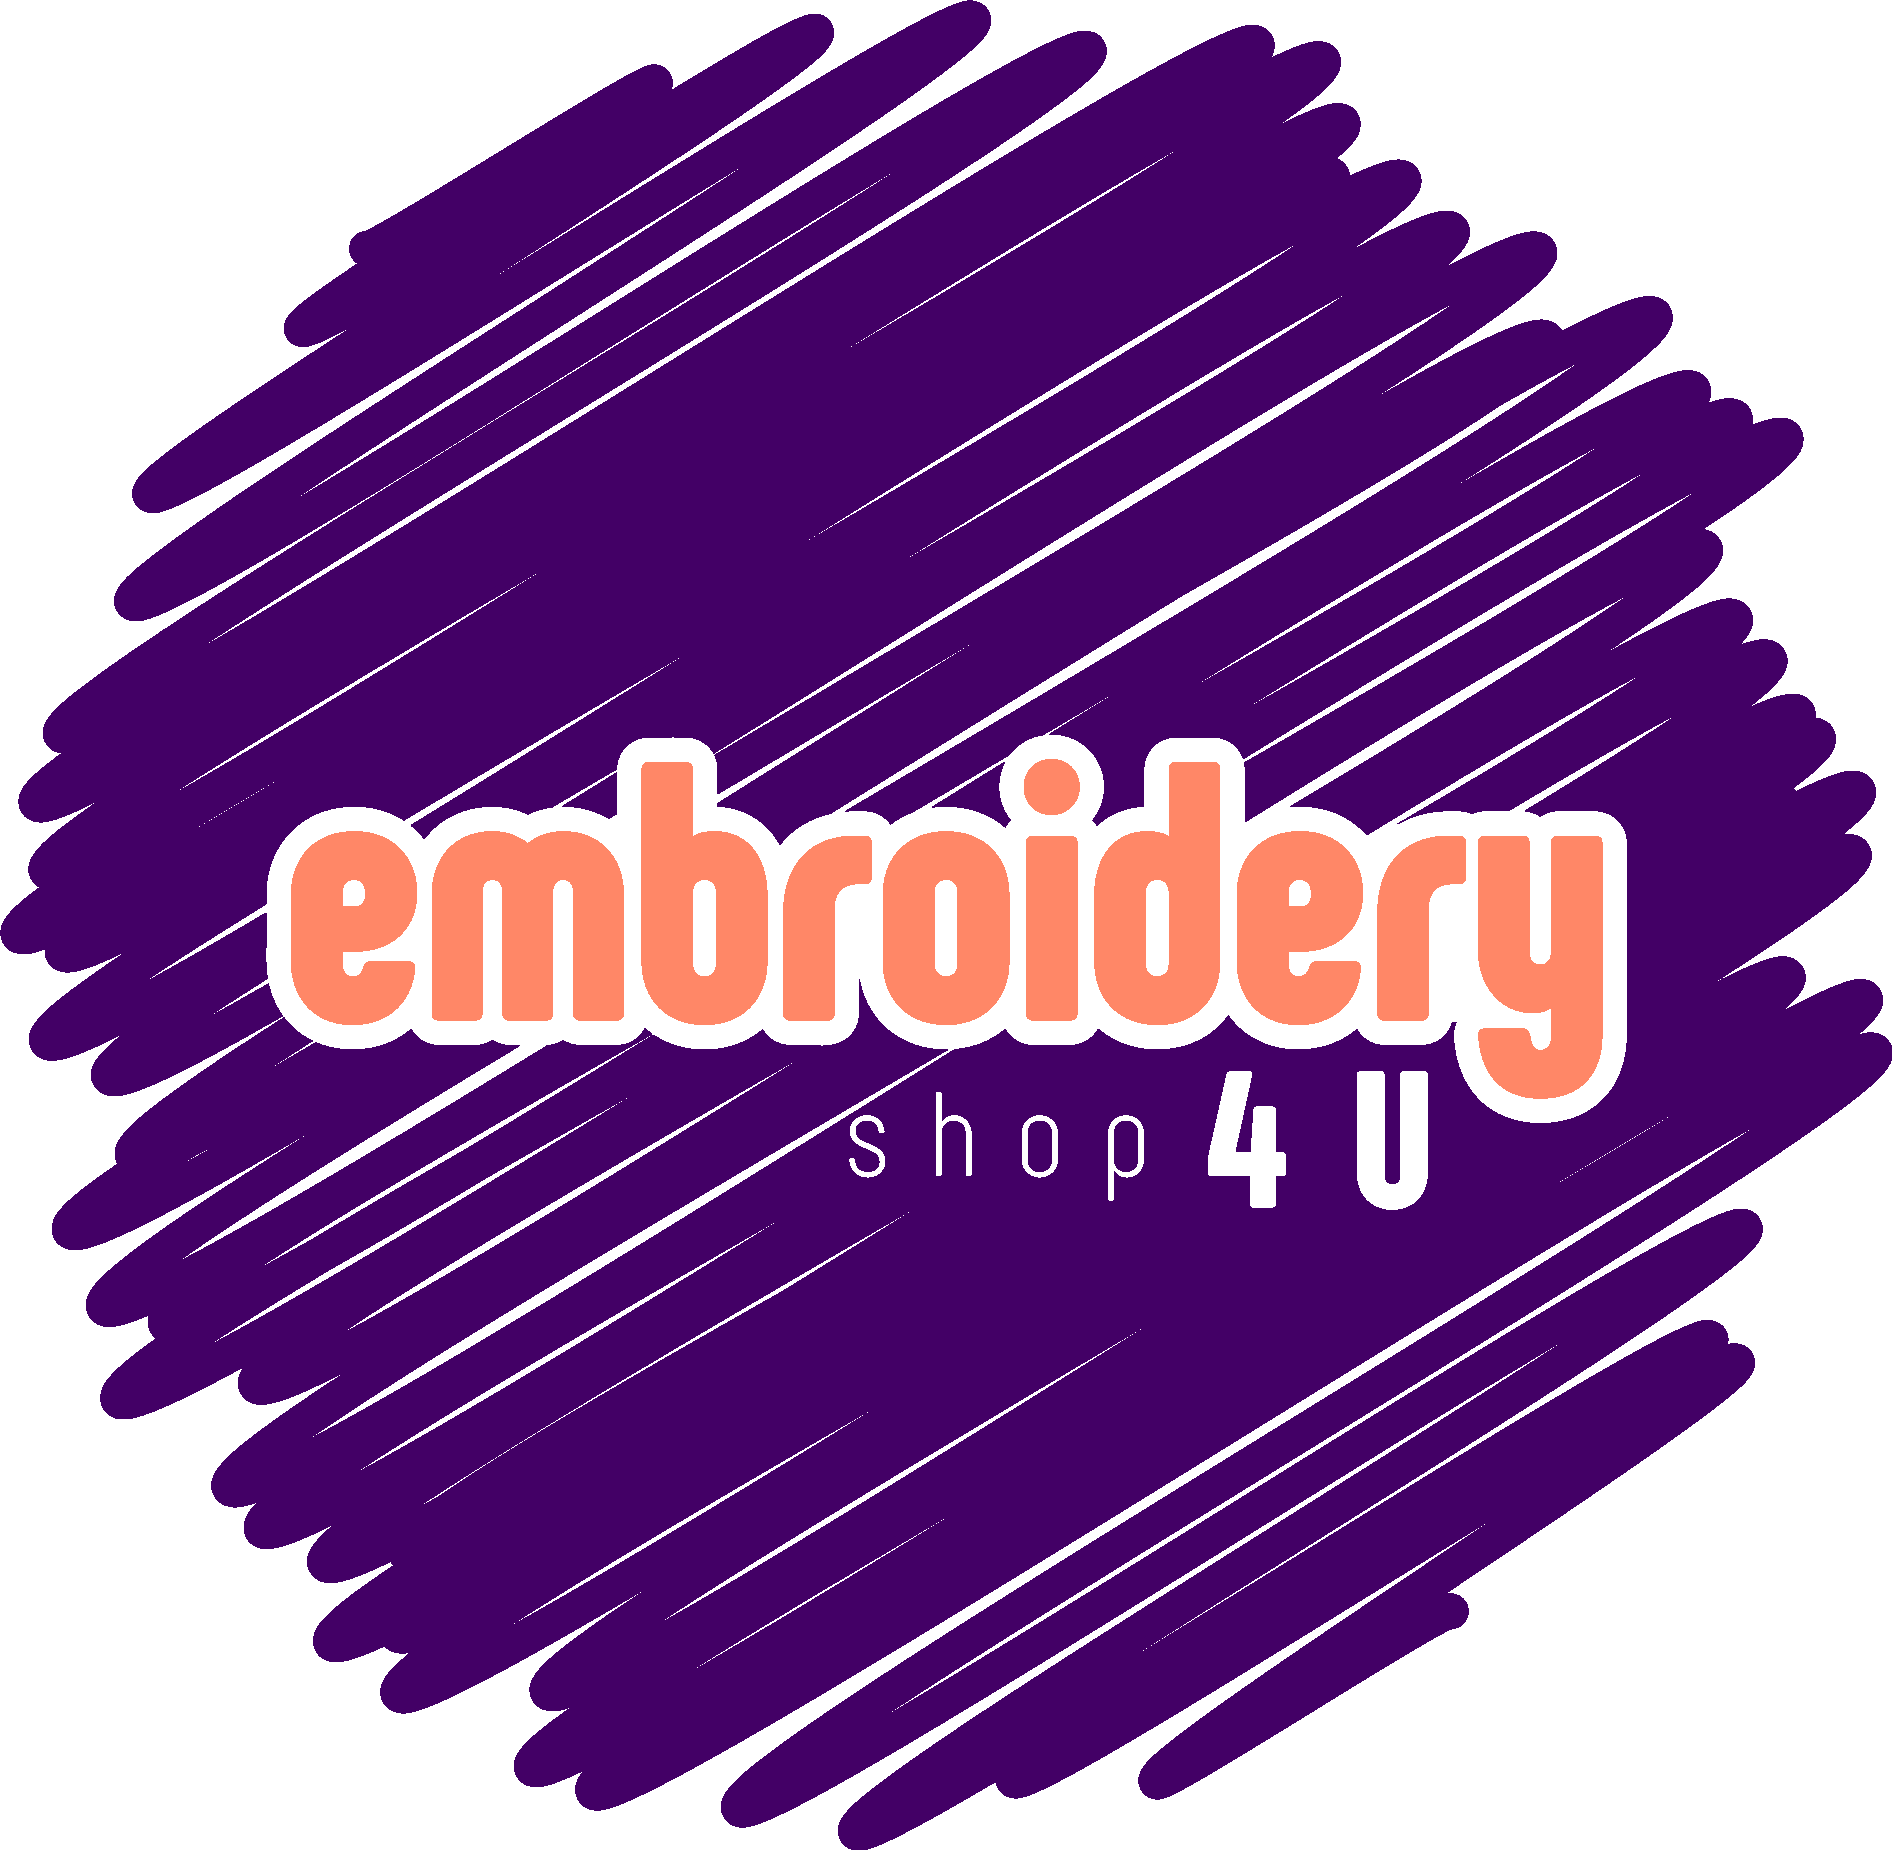 Embroideryshop4u Logo Vector.svg